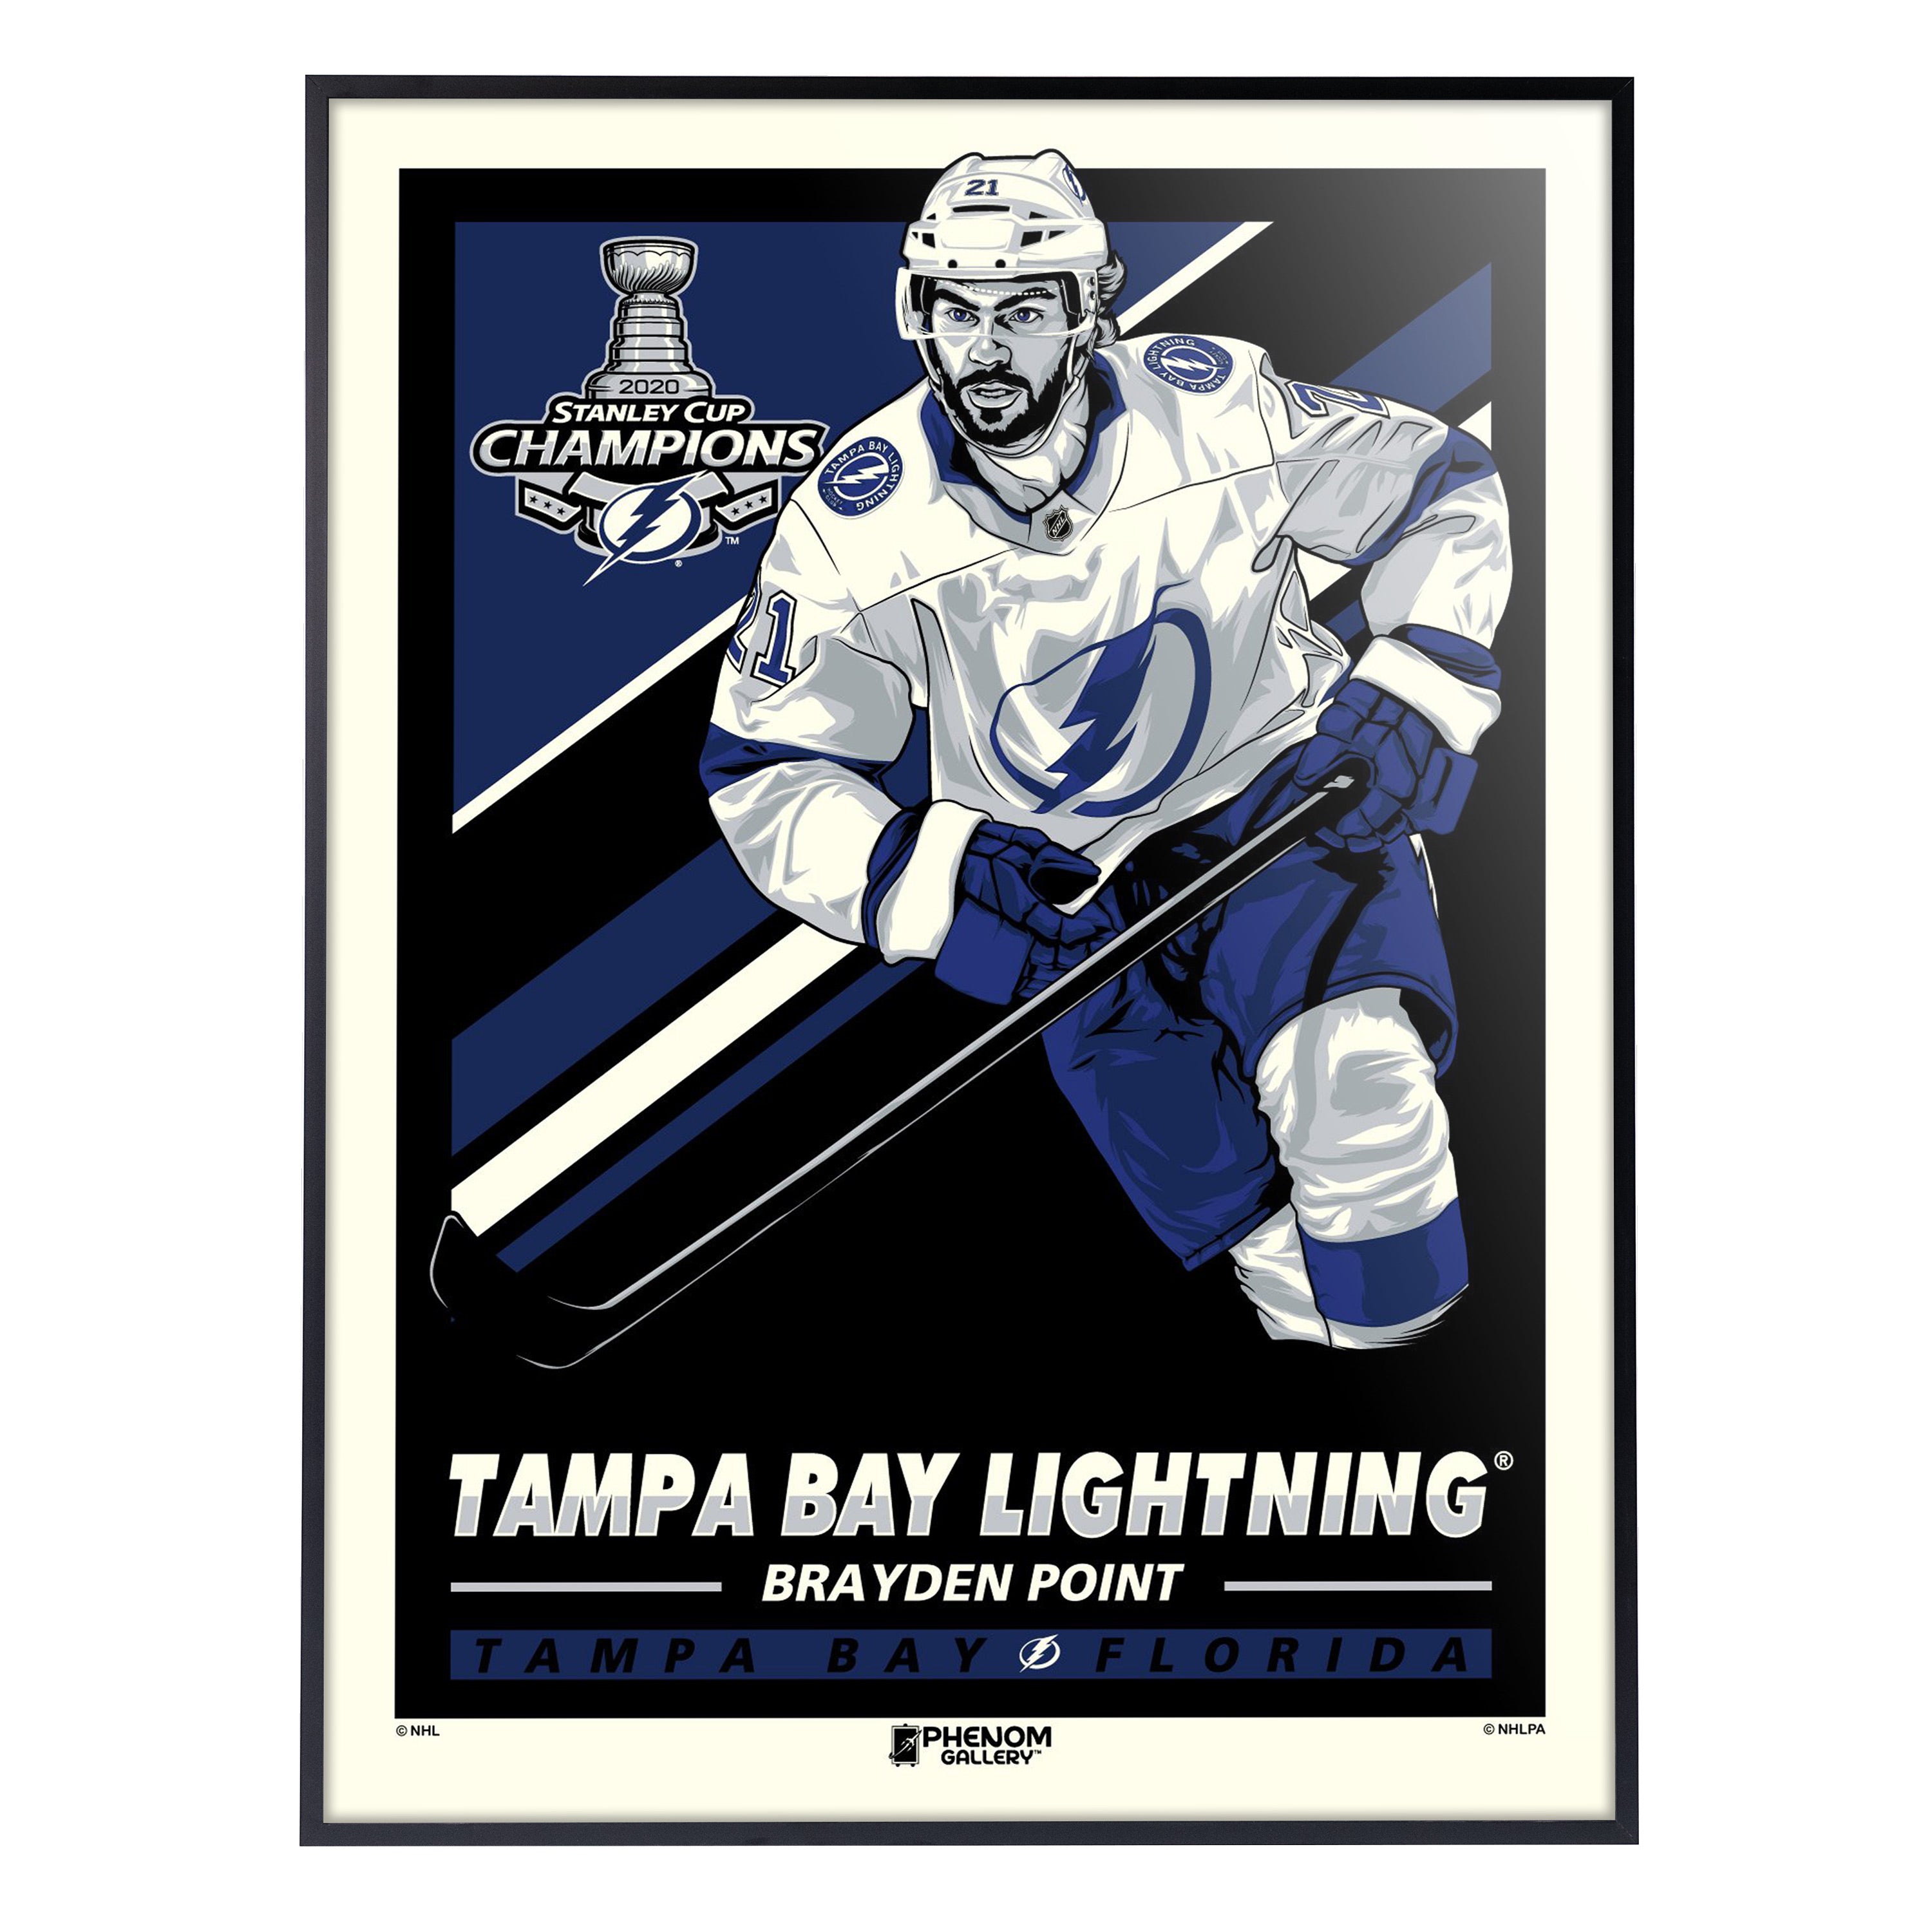 Cheap Tampa Bay Lightning Apparel, Discount Lightning Gear, NHL Lightning  Merchandise On Sale